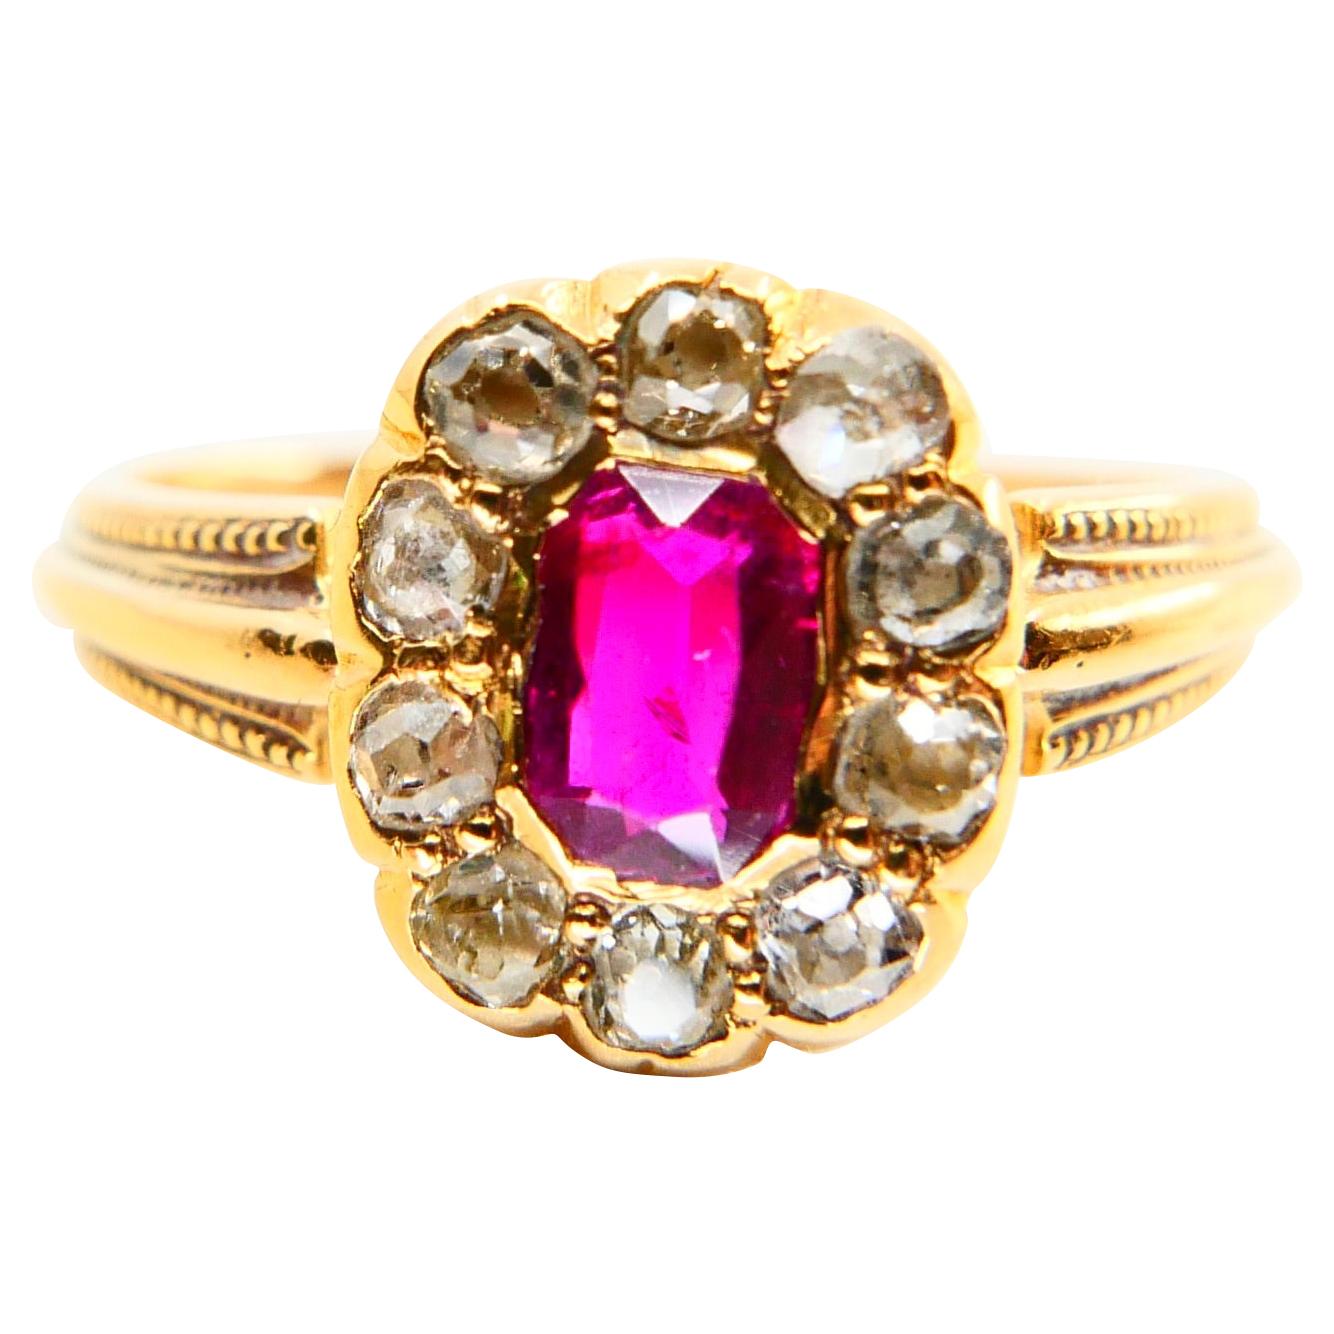 Vintage Burma Ruby and Old Mine Cut Diamond Ring, 18 Karat Yellow Gold